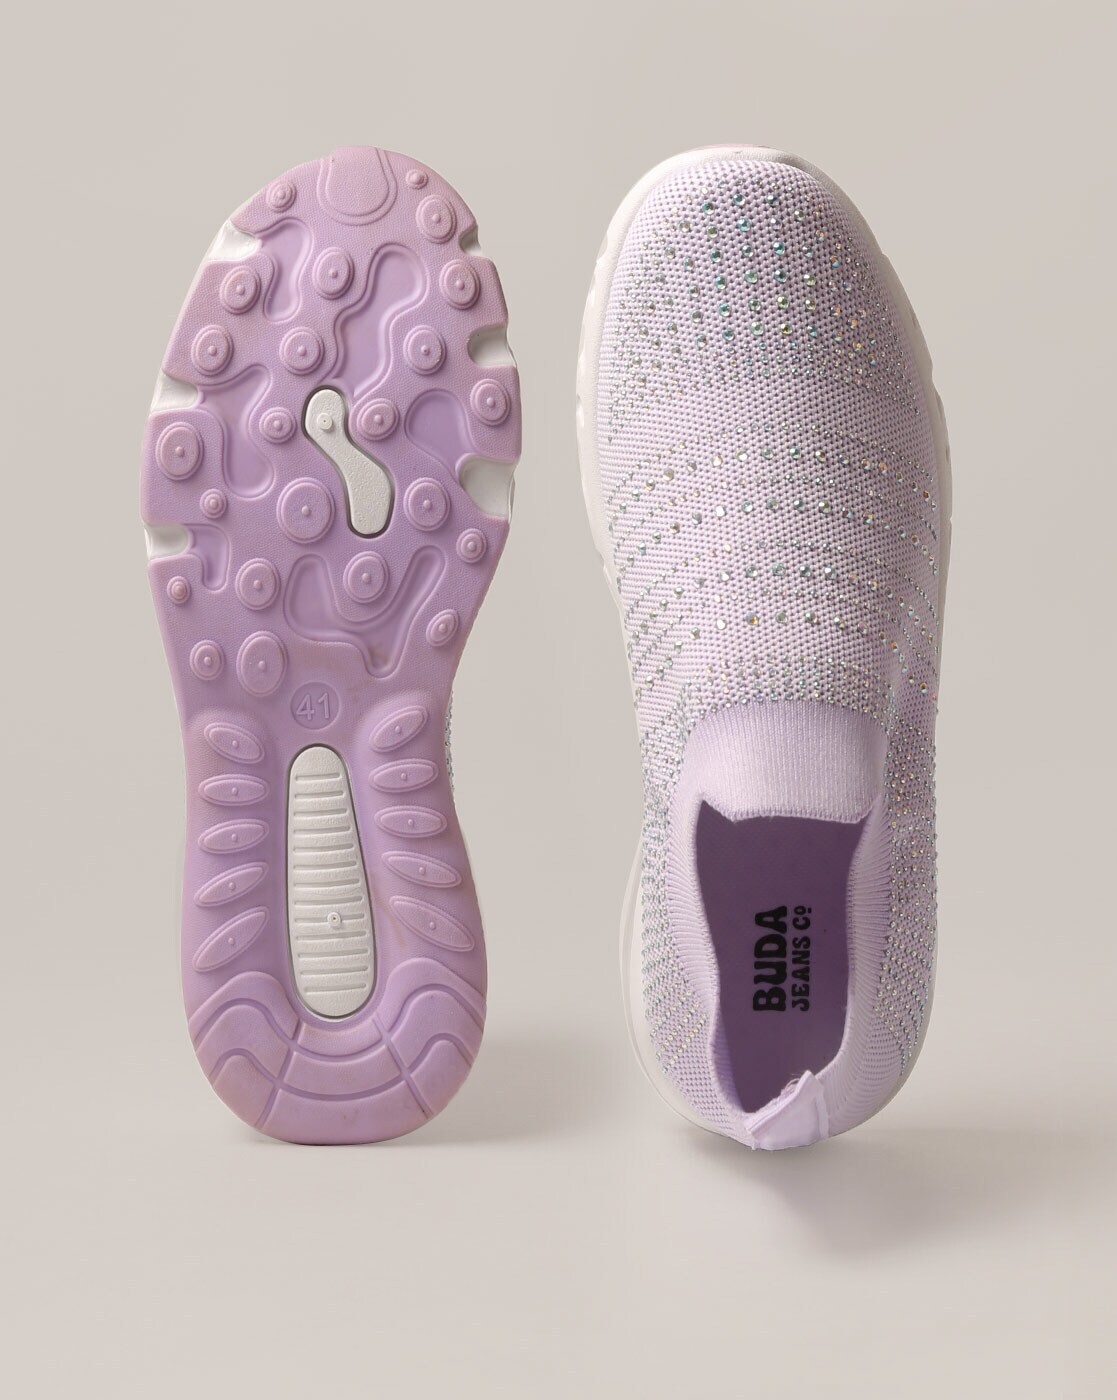 Pin on designer shoes 🤎